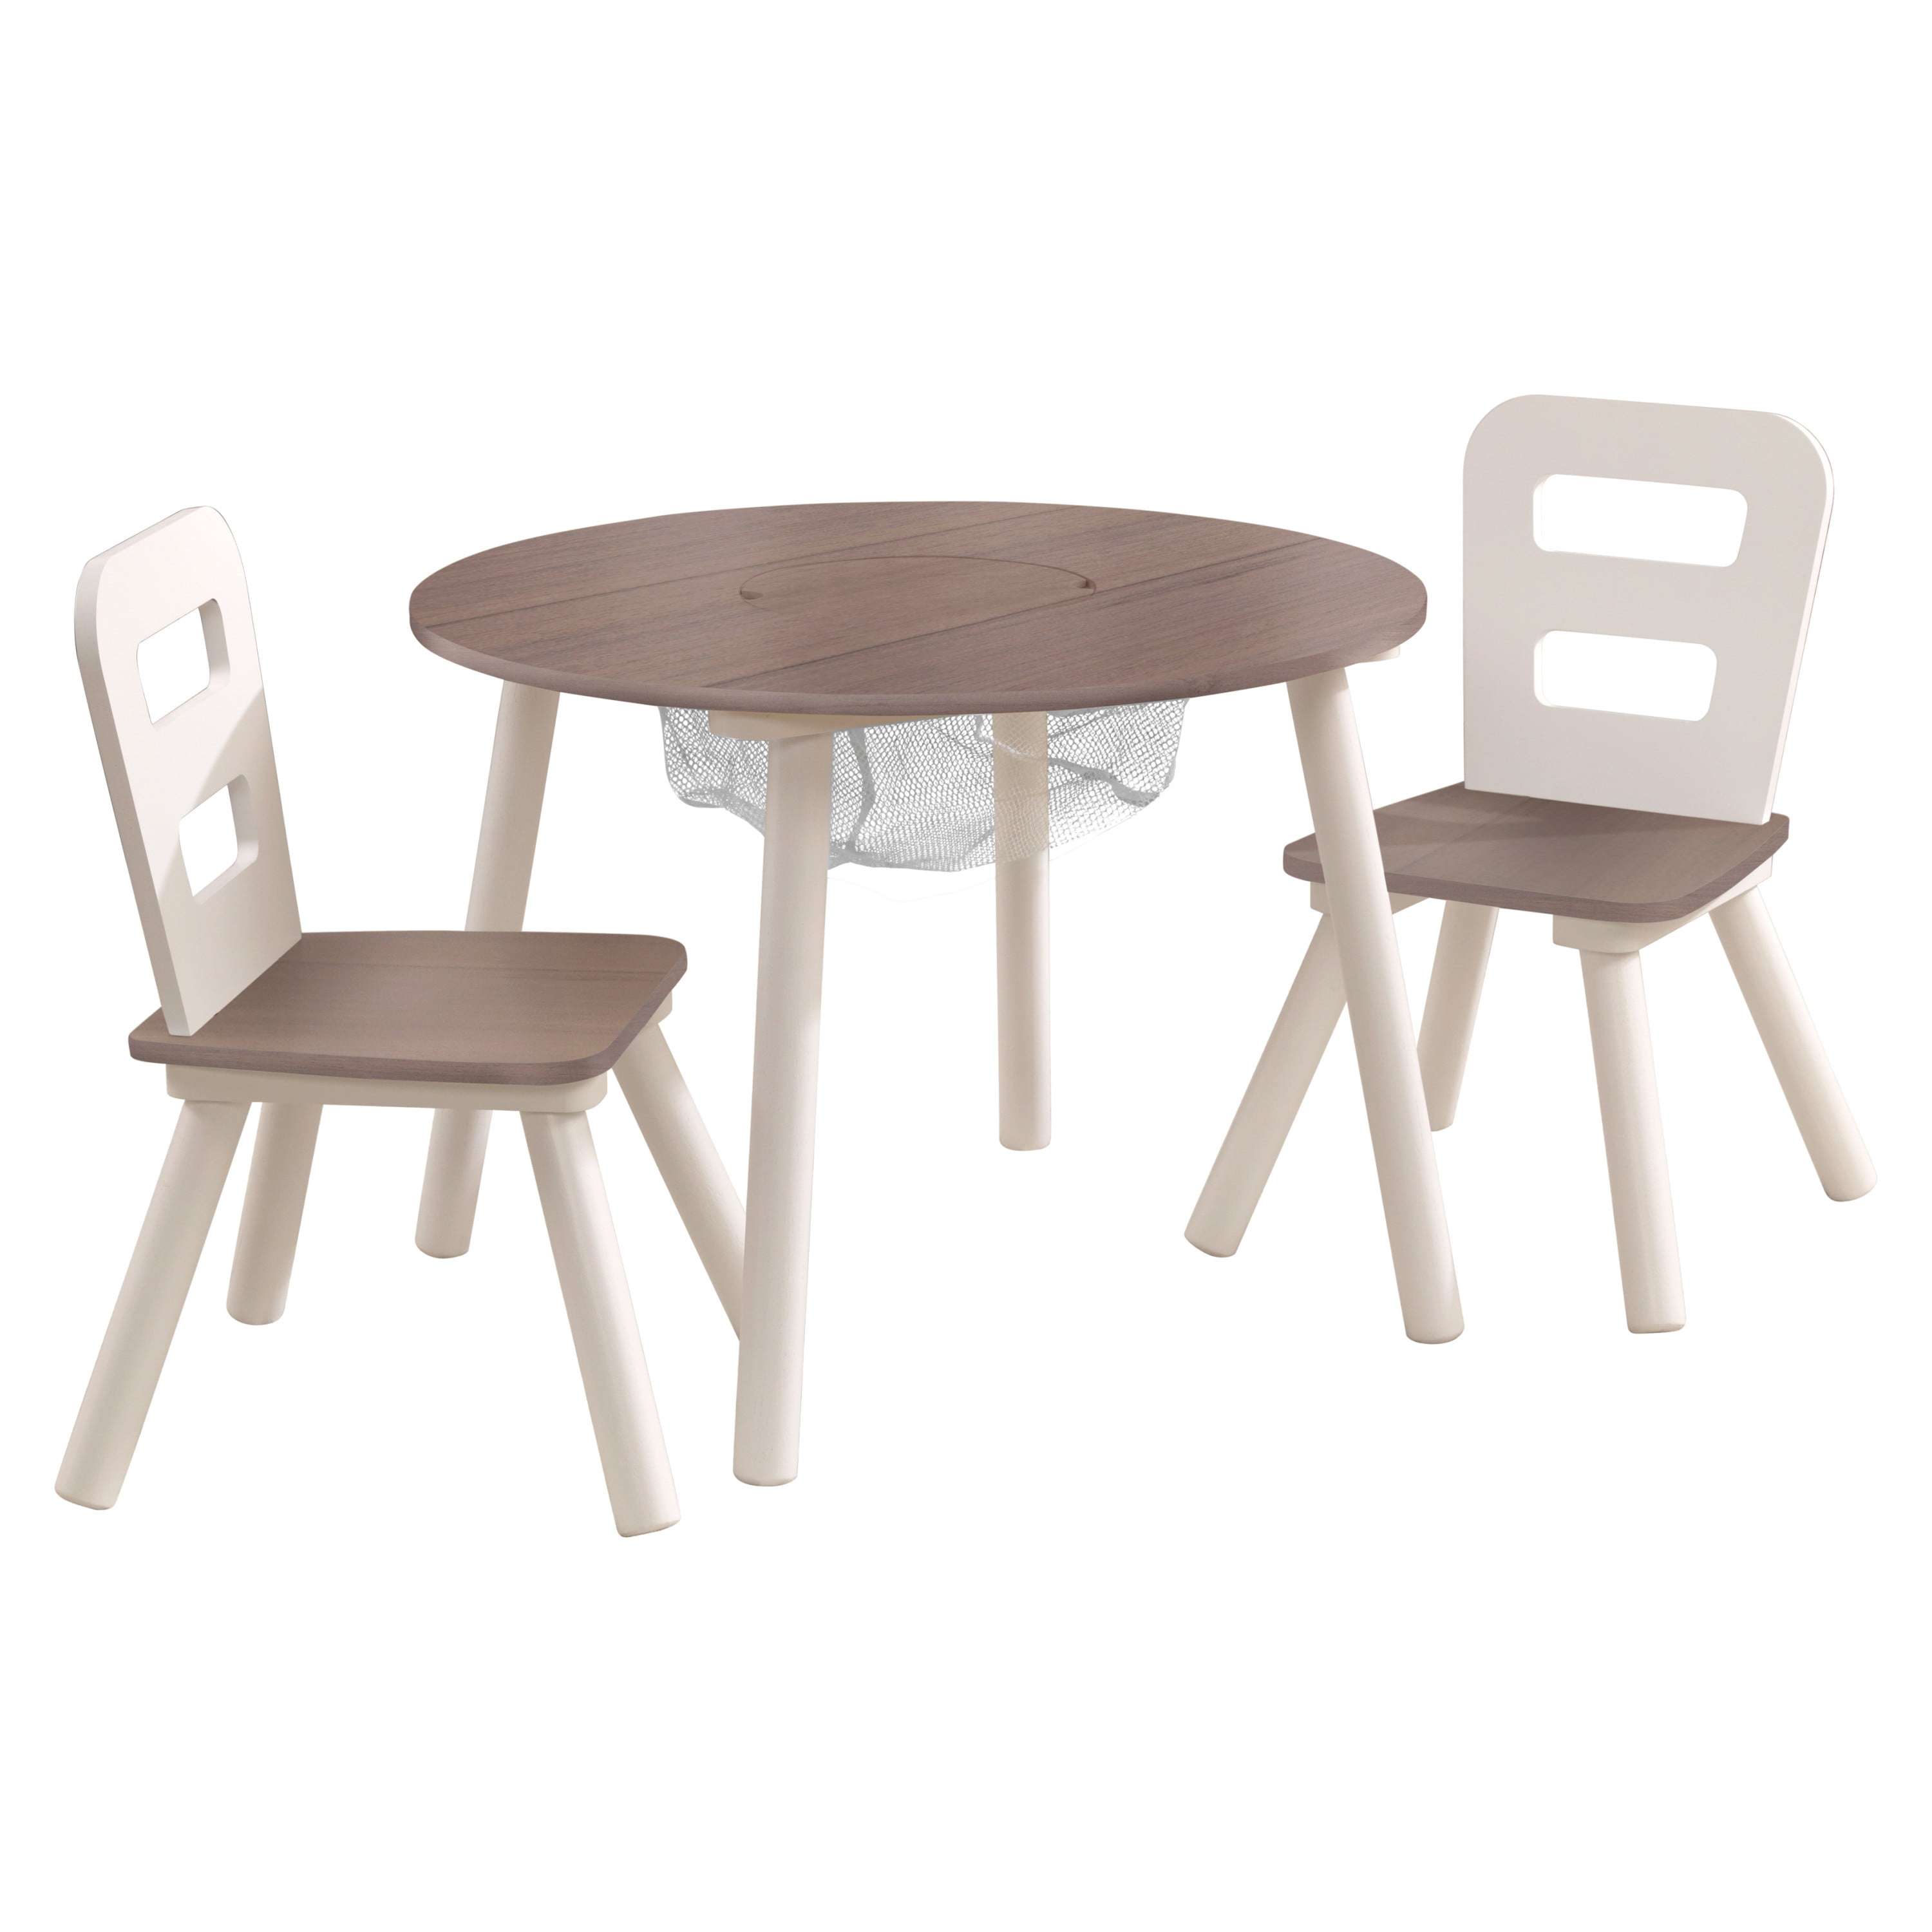 Kidkraft Round Storage Table 2 Chair, Kidkraft Round Table And Chairs White